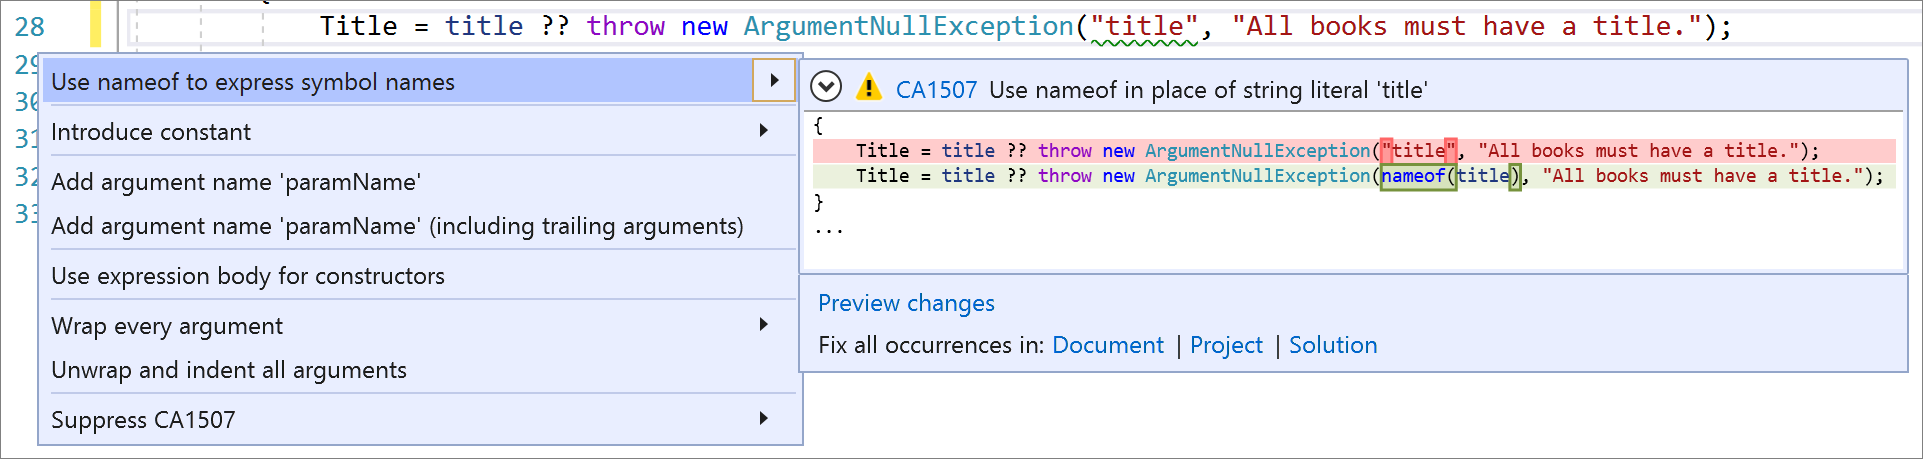 Code fix for CA1507 - use nameof to express symbol names